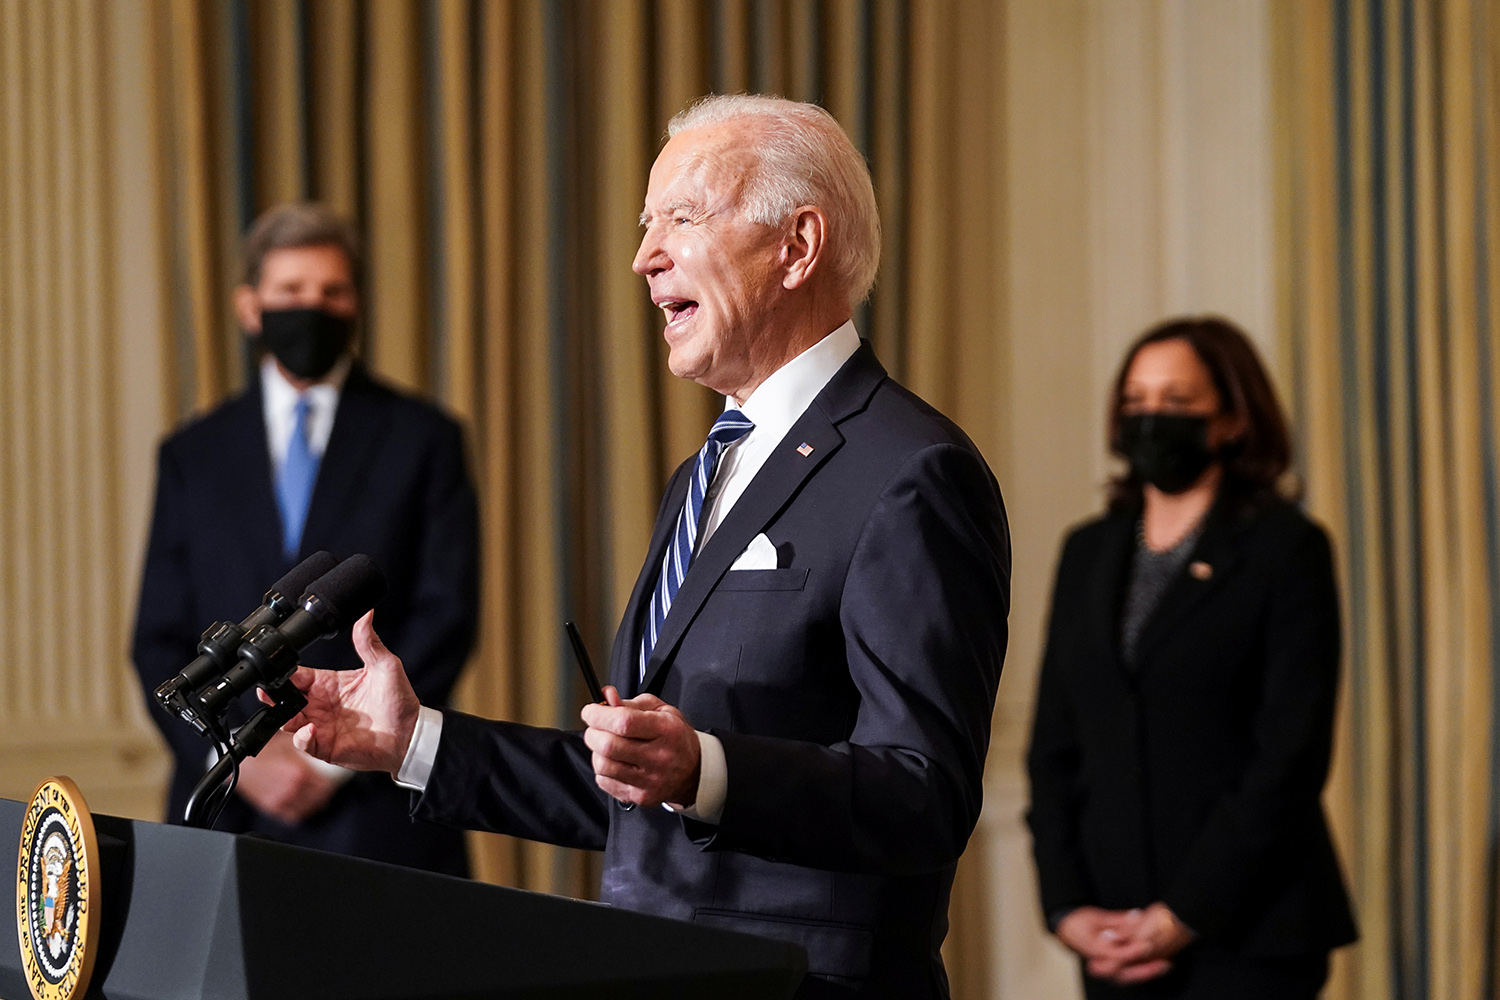 Biden declares 'America is back' in welcome words to allies